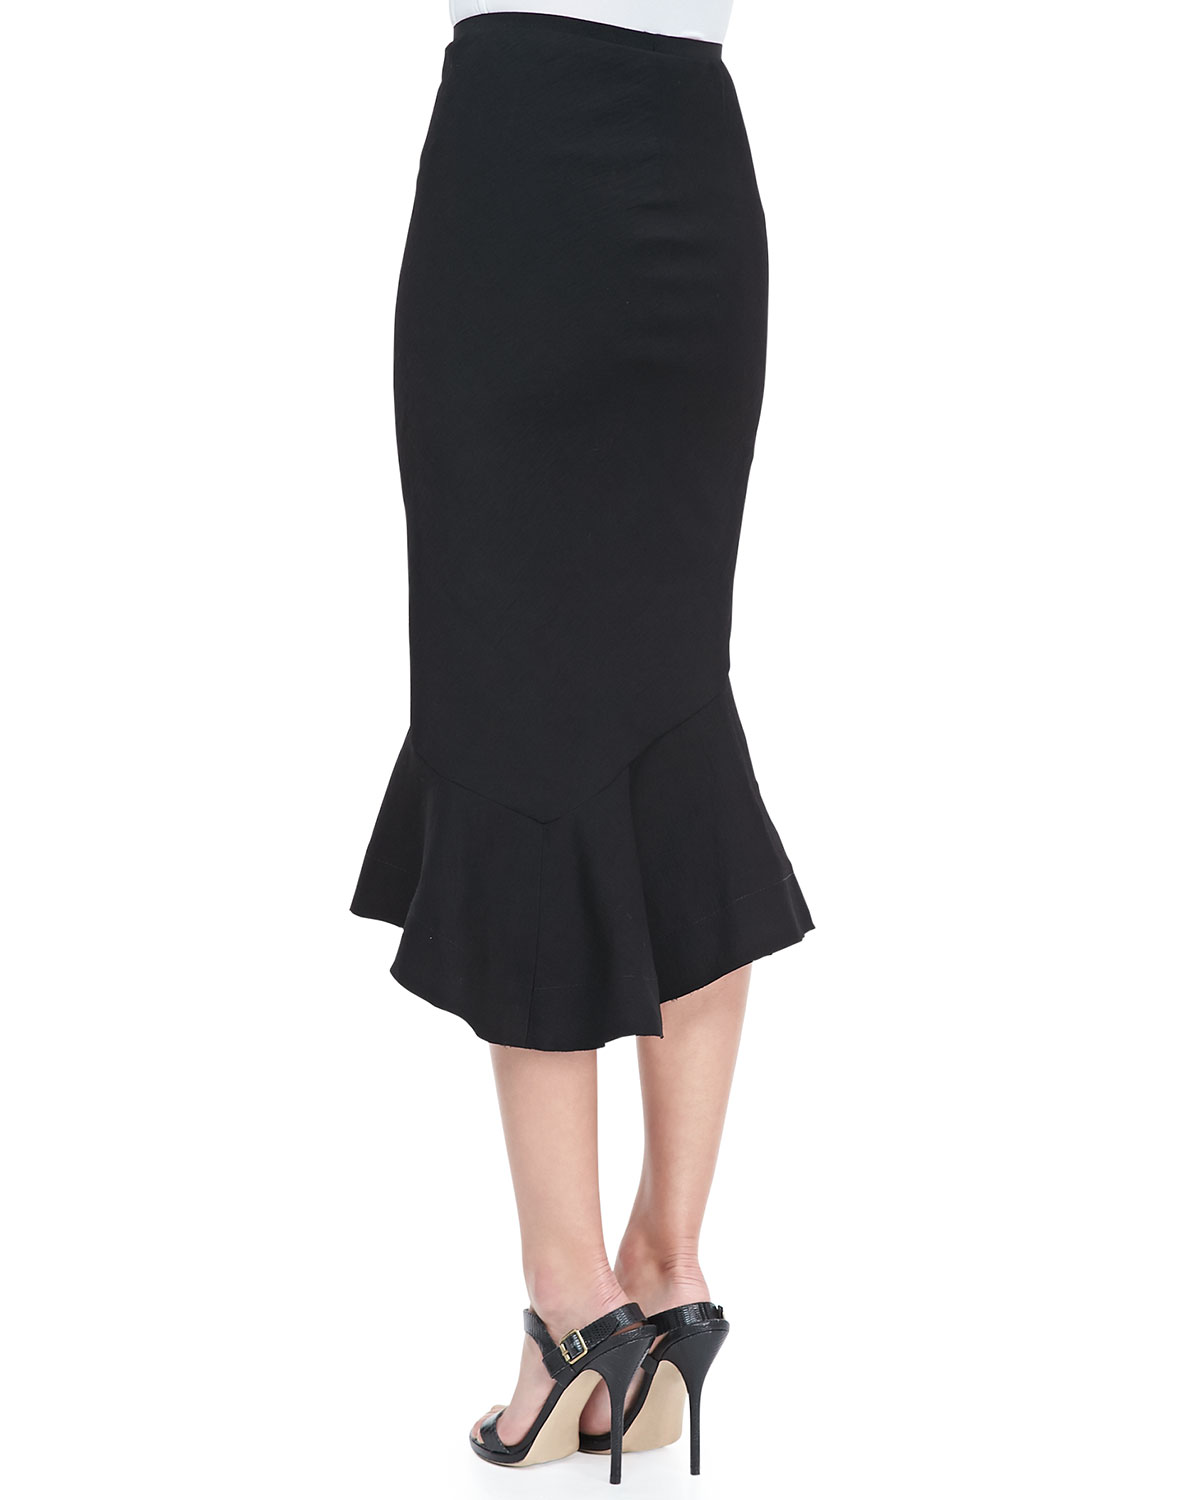 Lyst - Donna karan Asymmetric Trumpet Skirt in Black